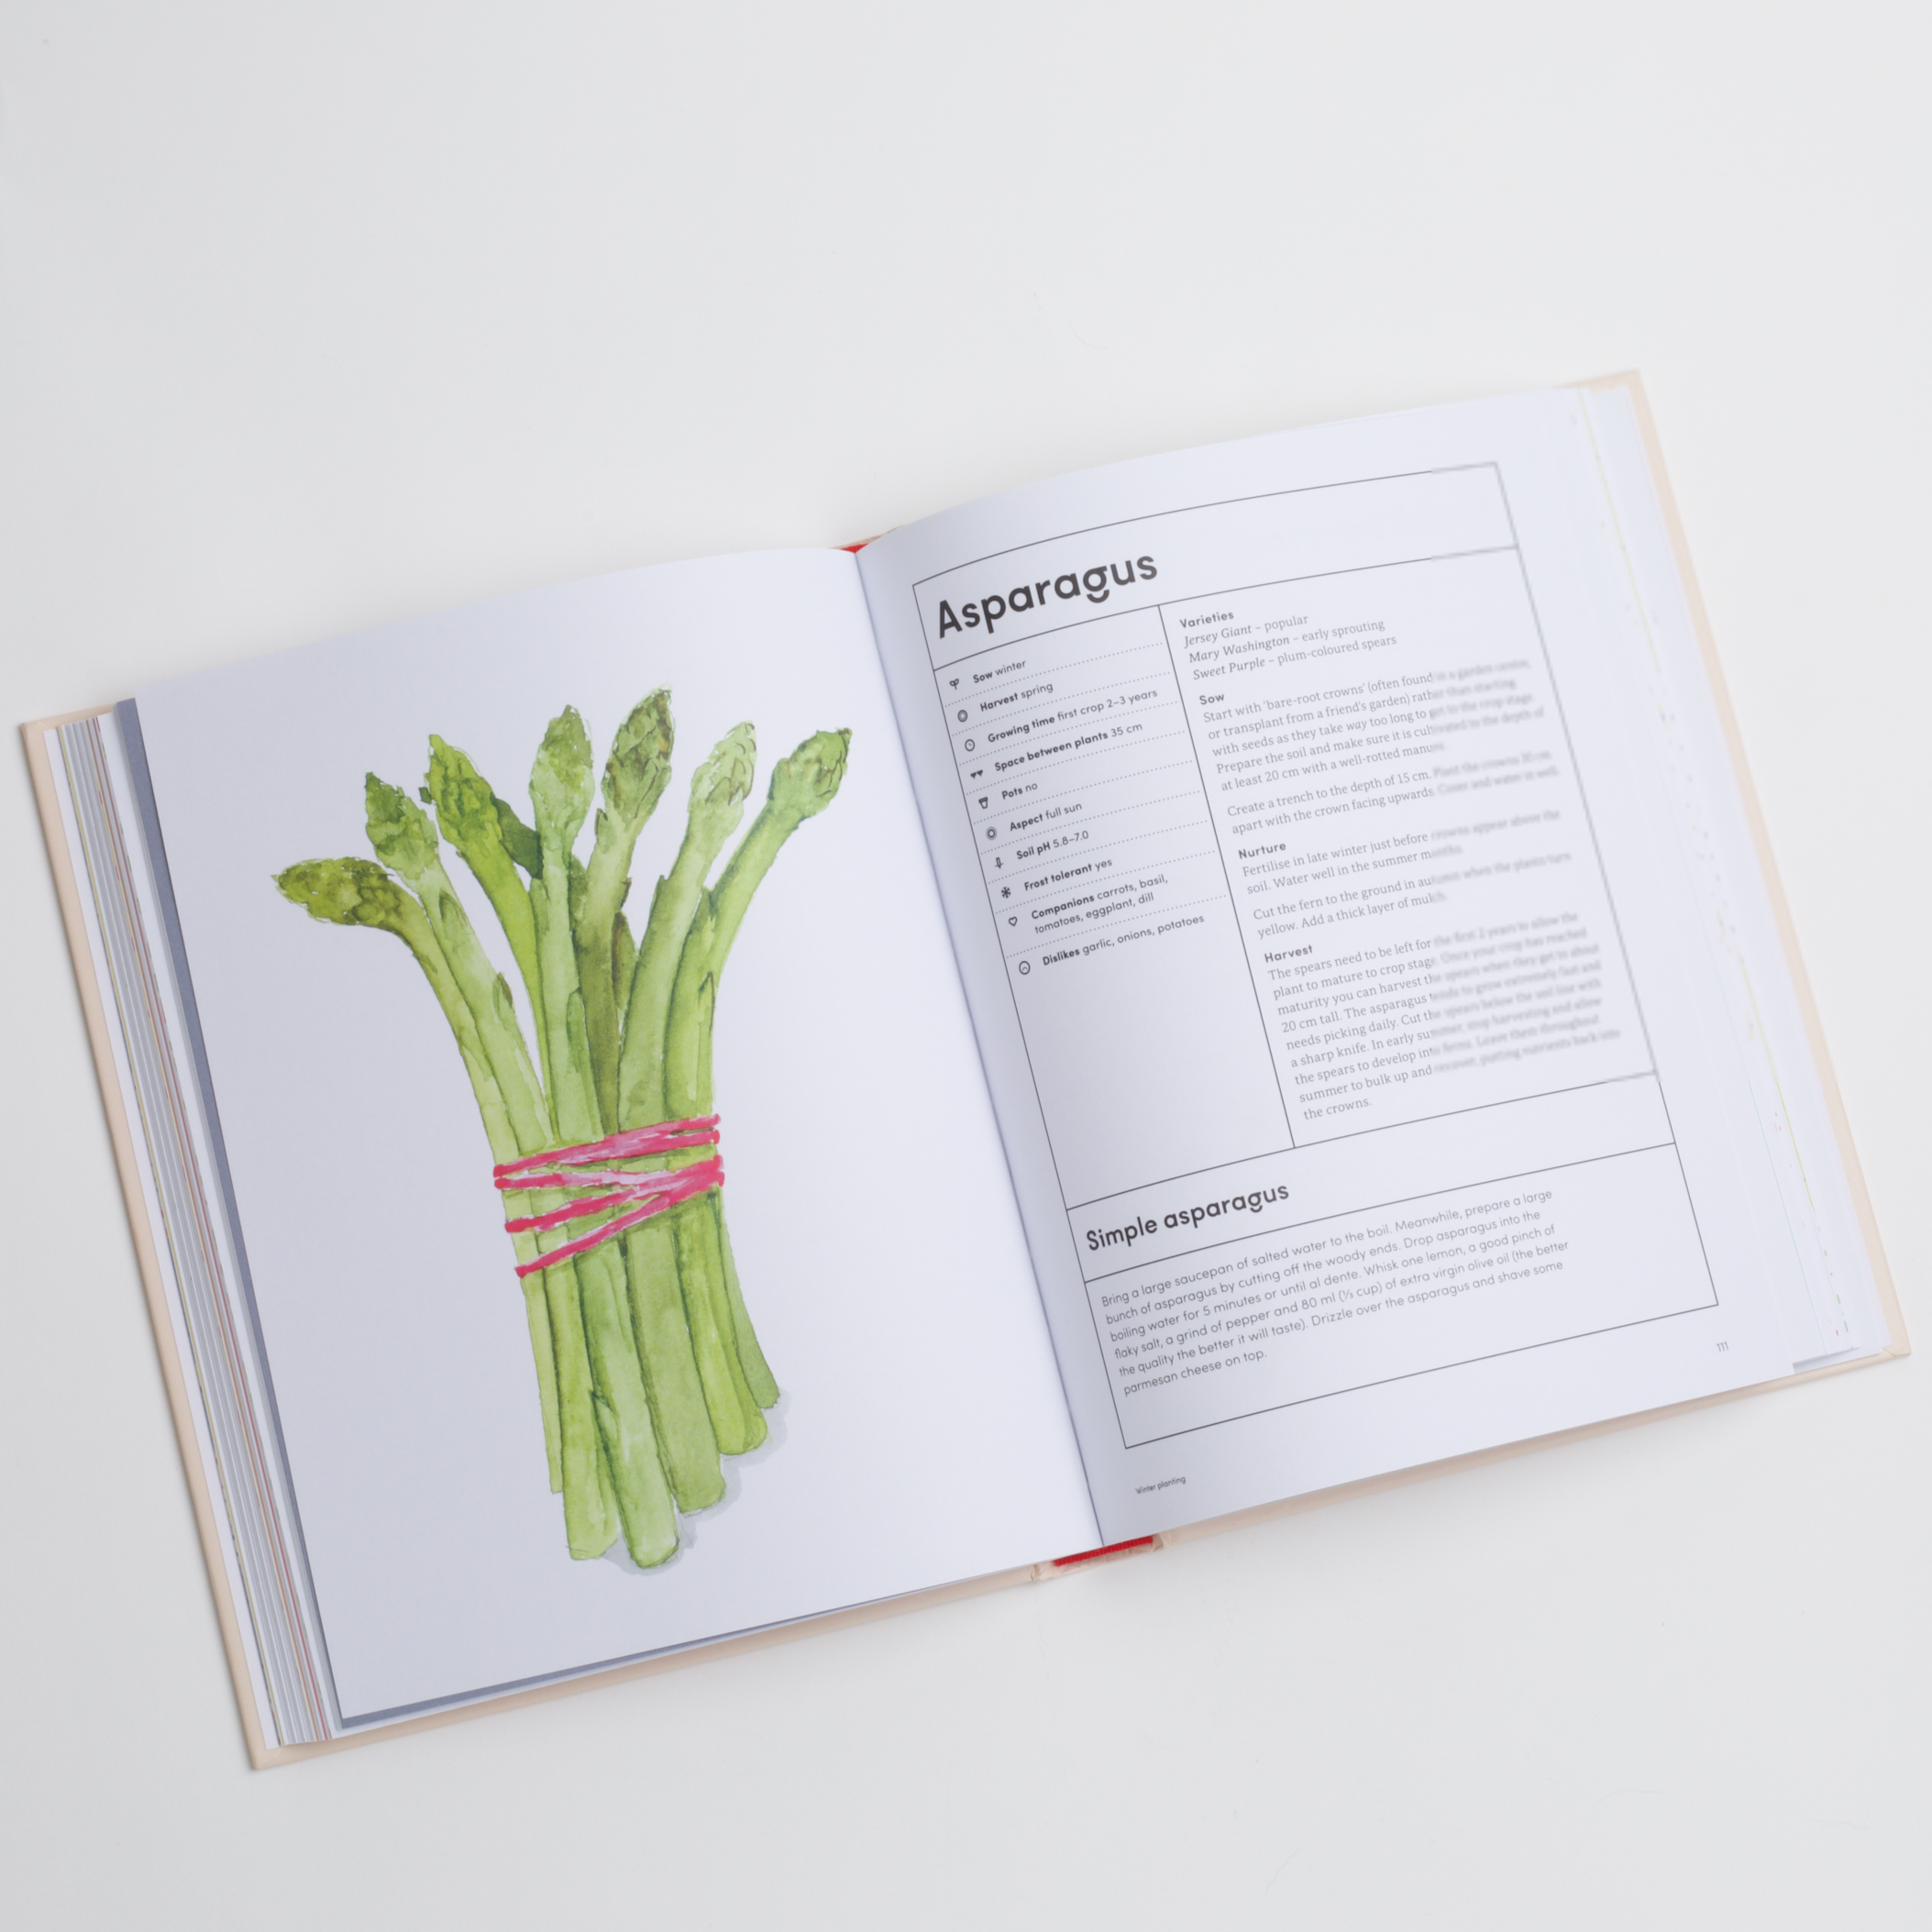 Asparagus Recipe inside The Kitchen Garden cookbook